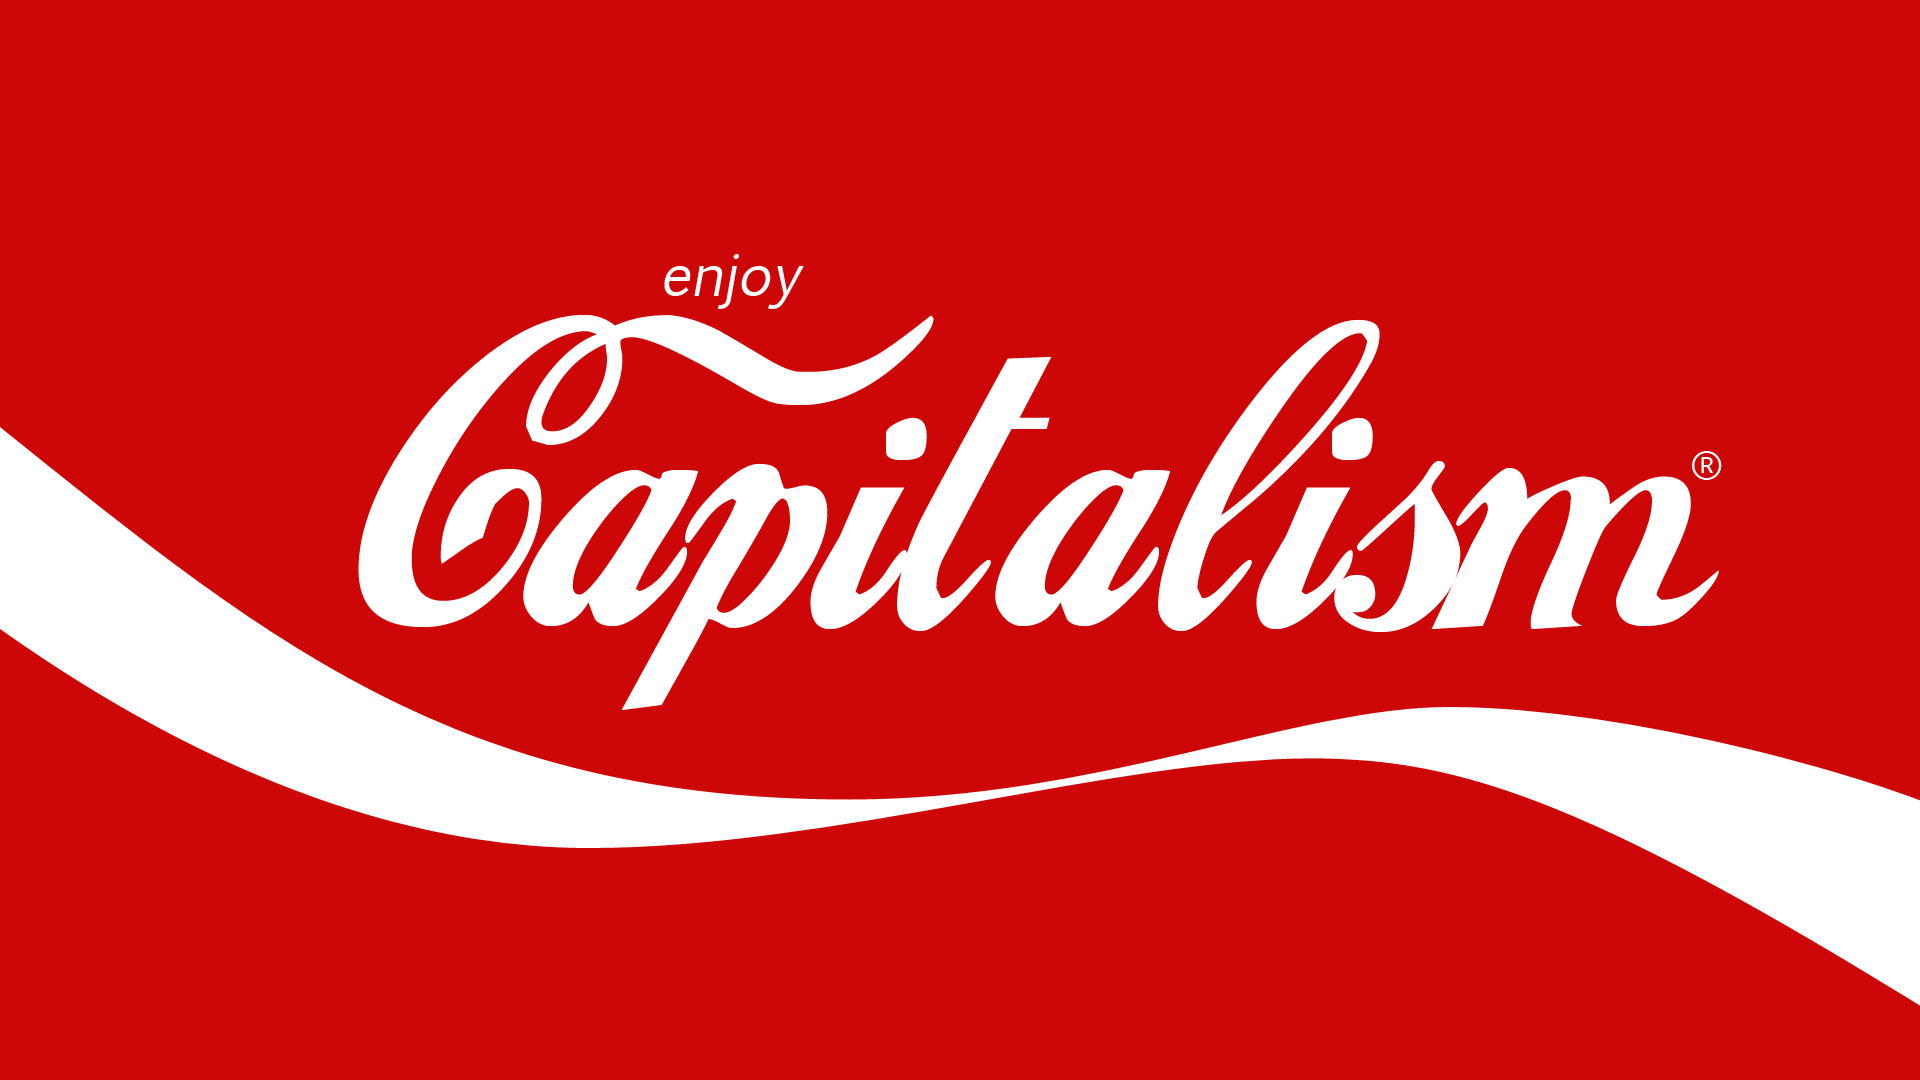 Primary Colors Capitalism Coca Cola Red White Humor 1920x1080